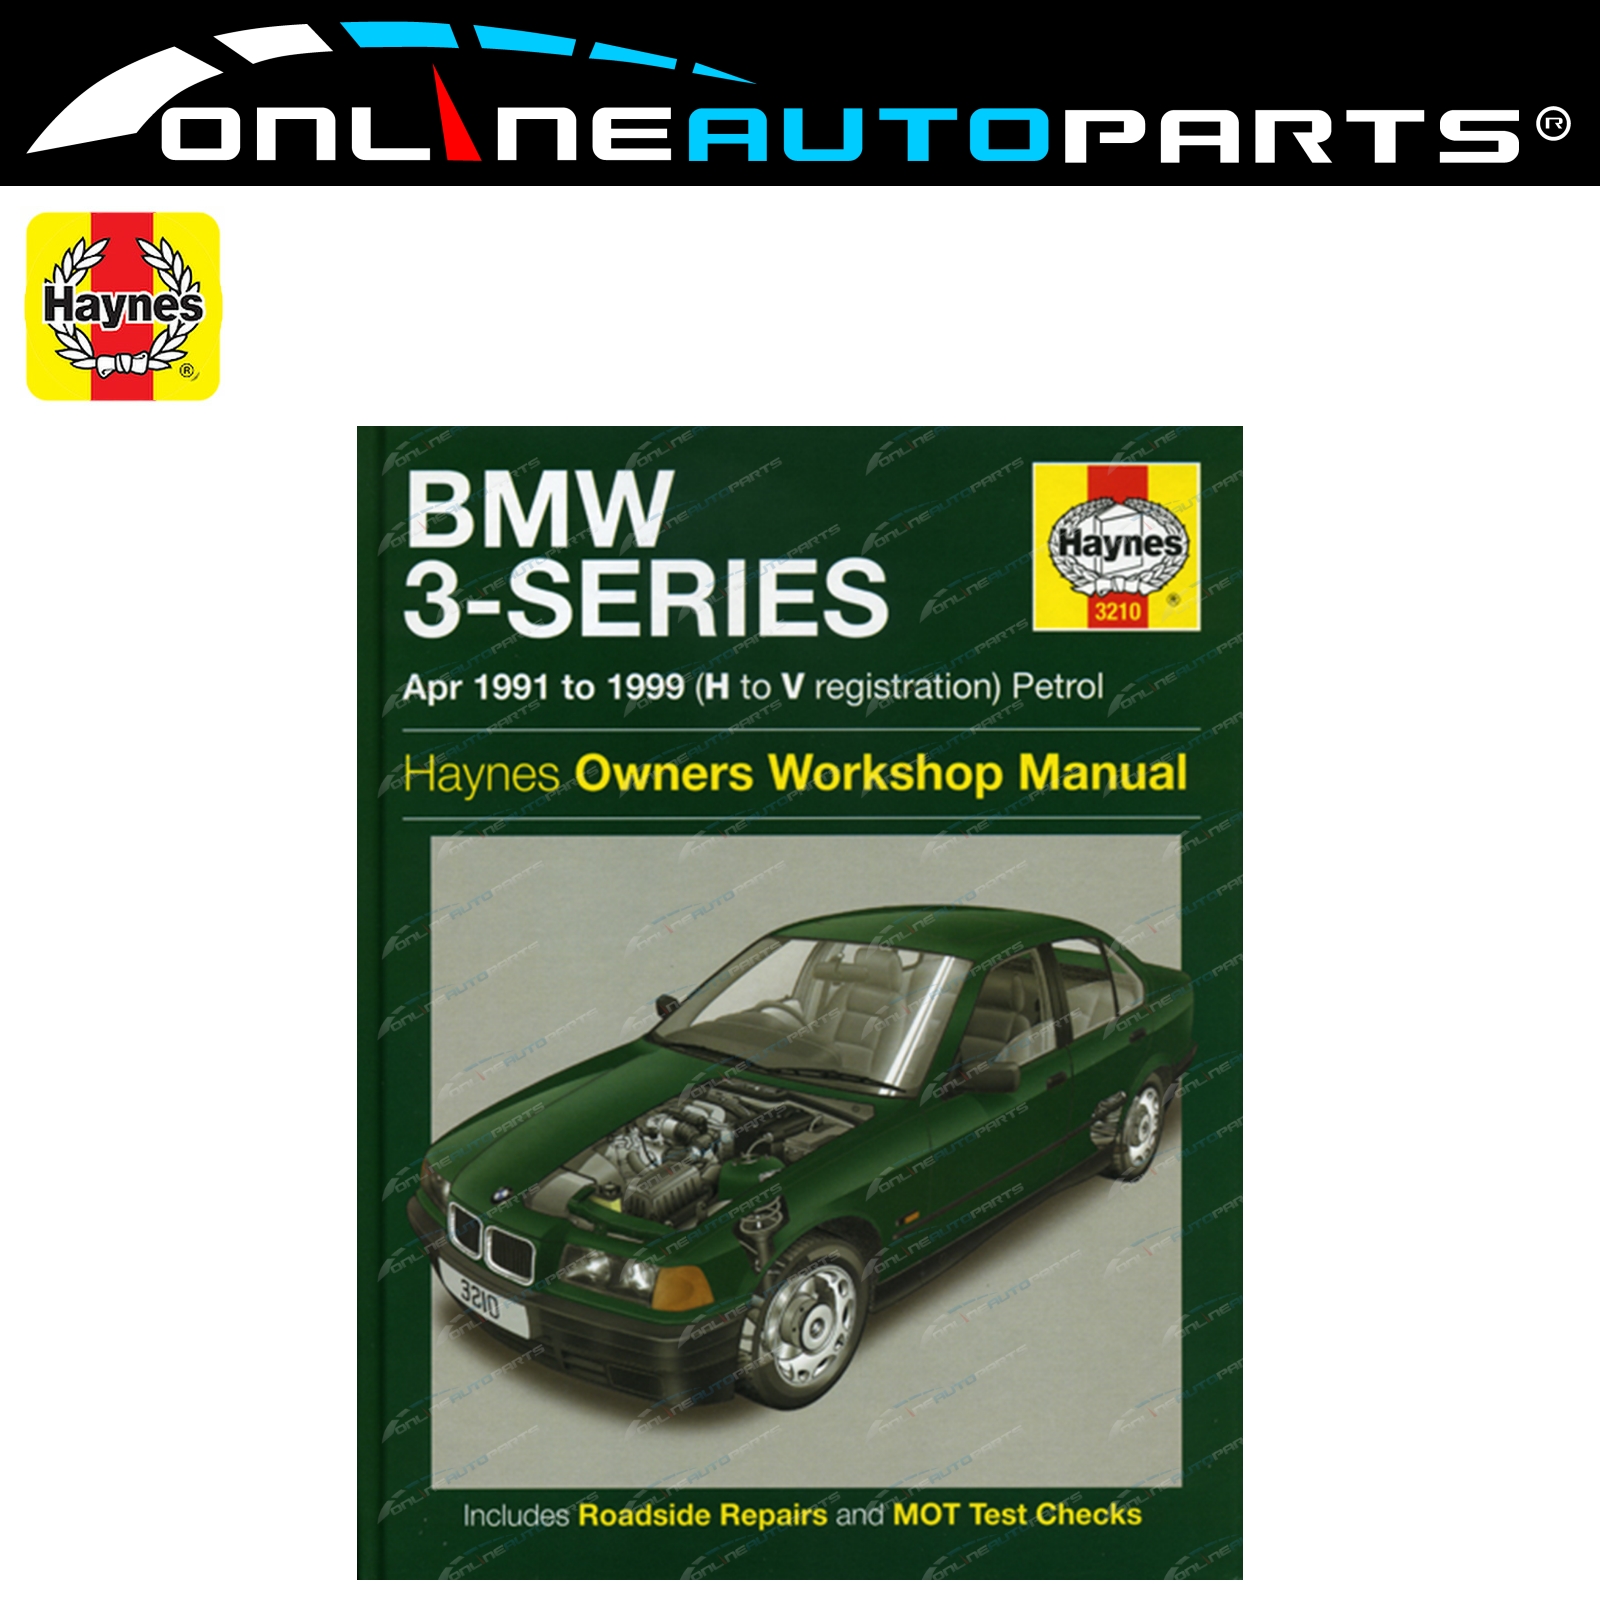 bmw 316i 1999 service manual